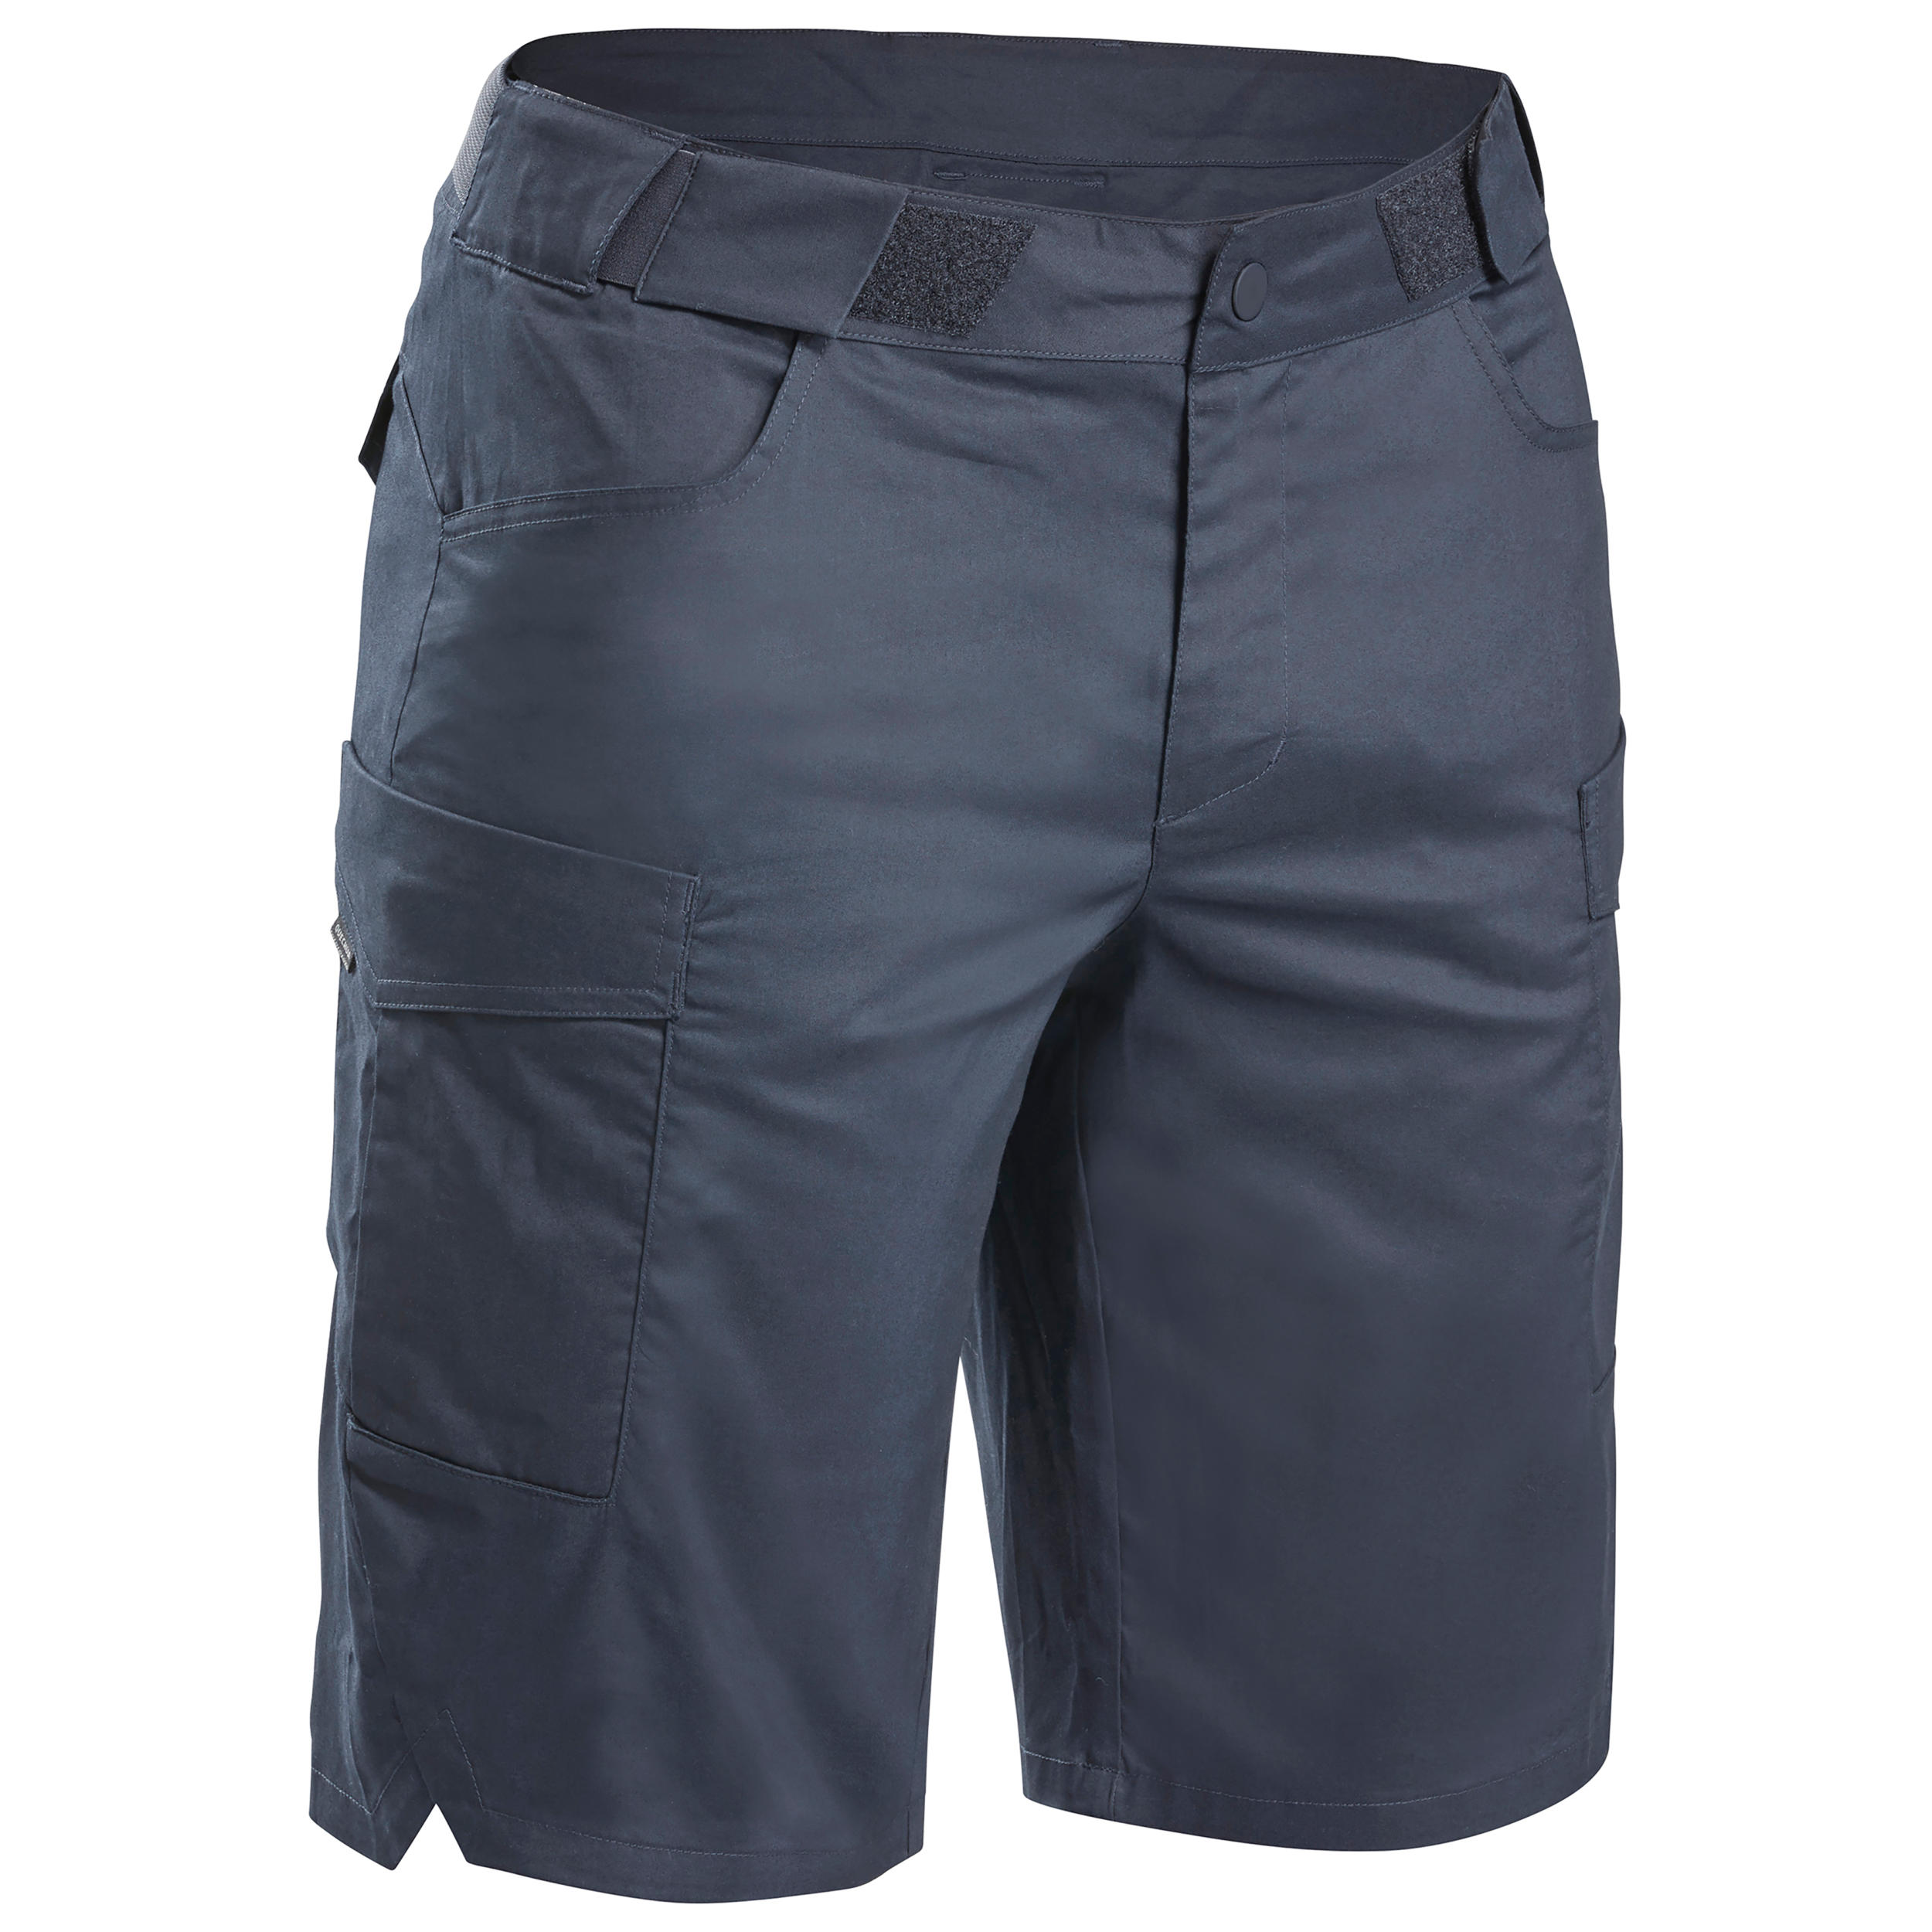 shorts for men decathlon